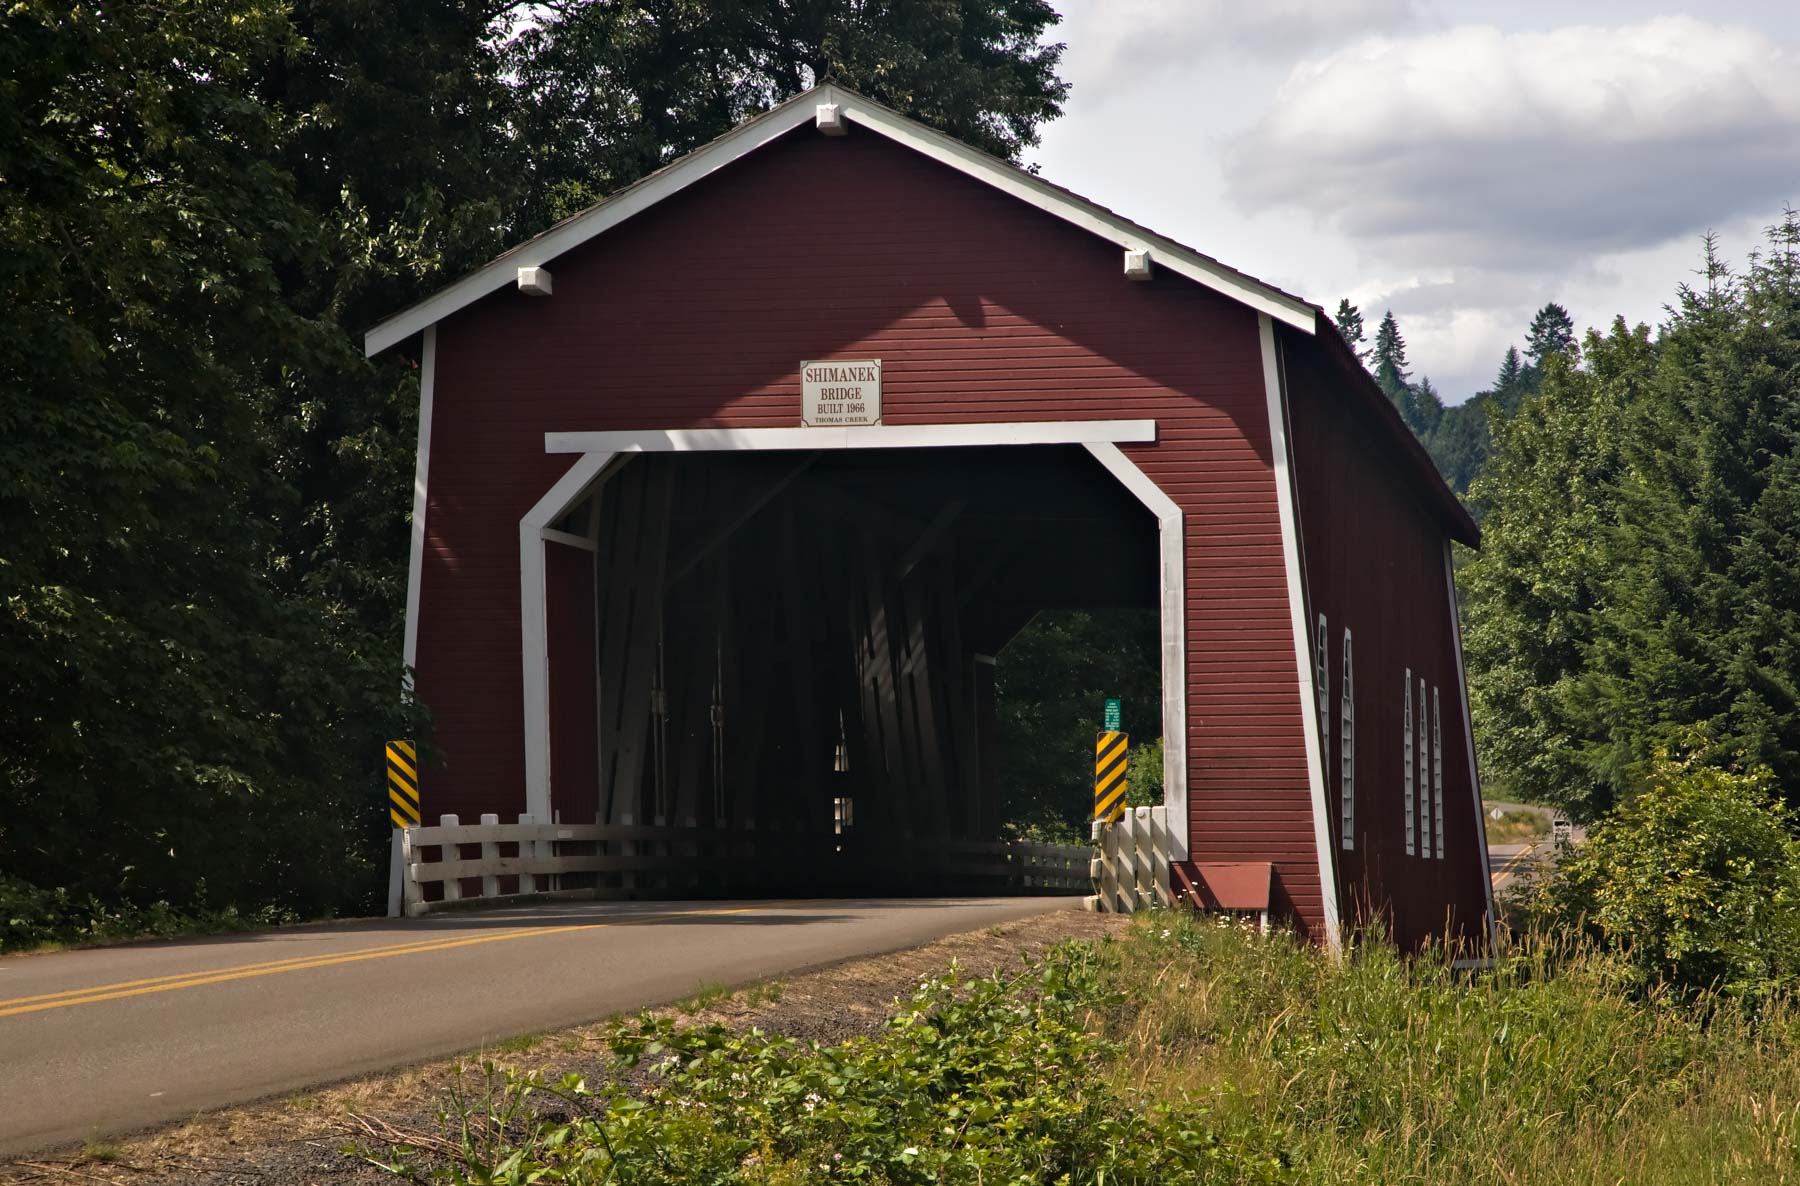 Shimanek covered bridge near Scio, Oregon